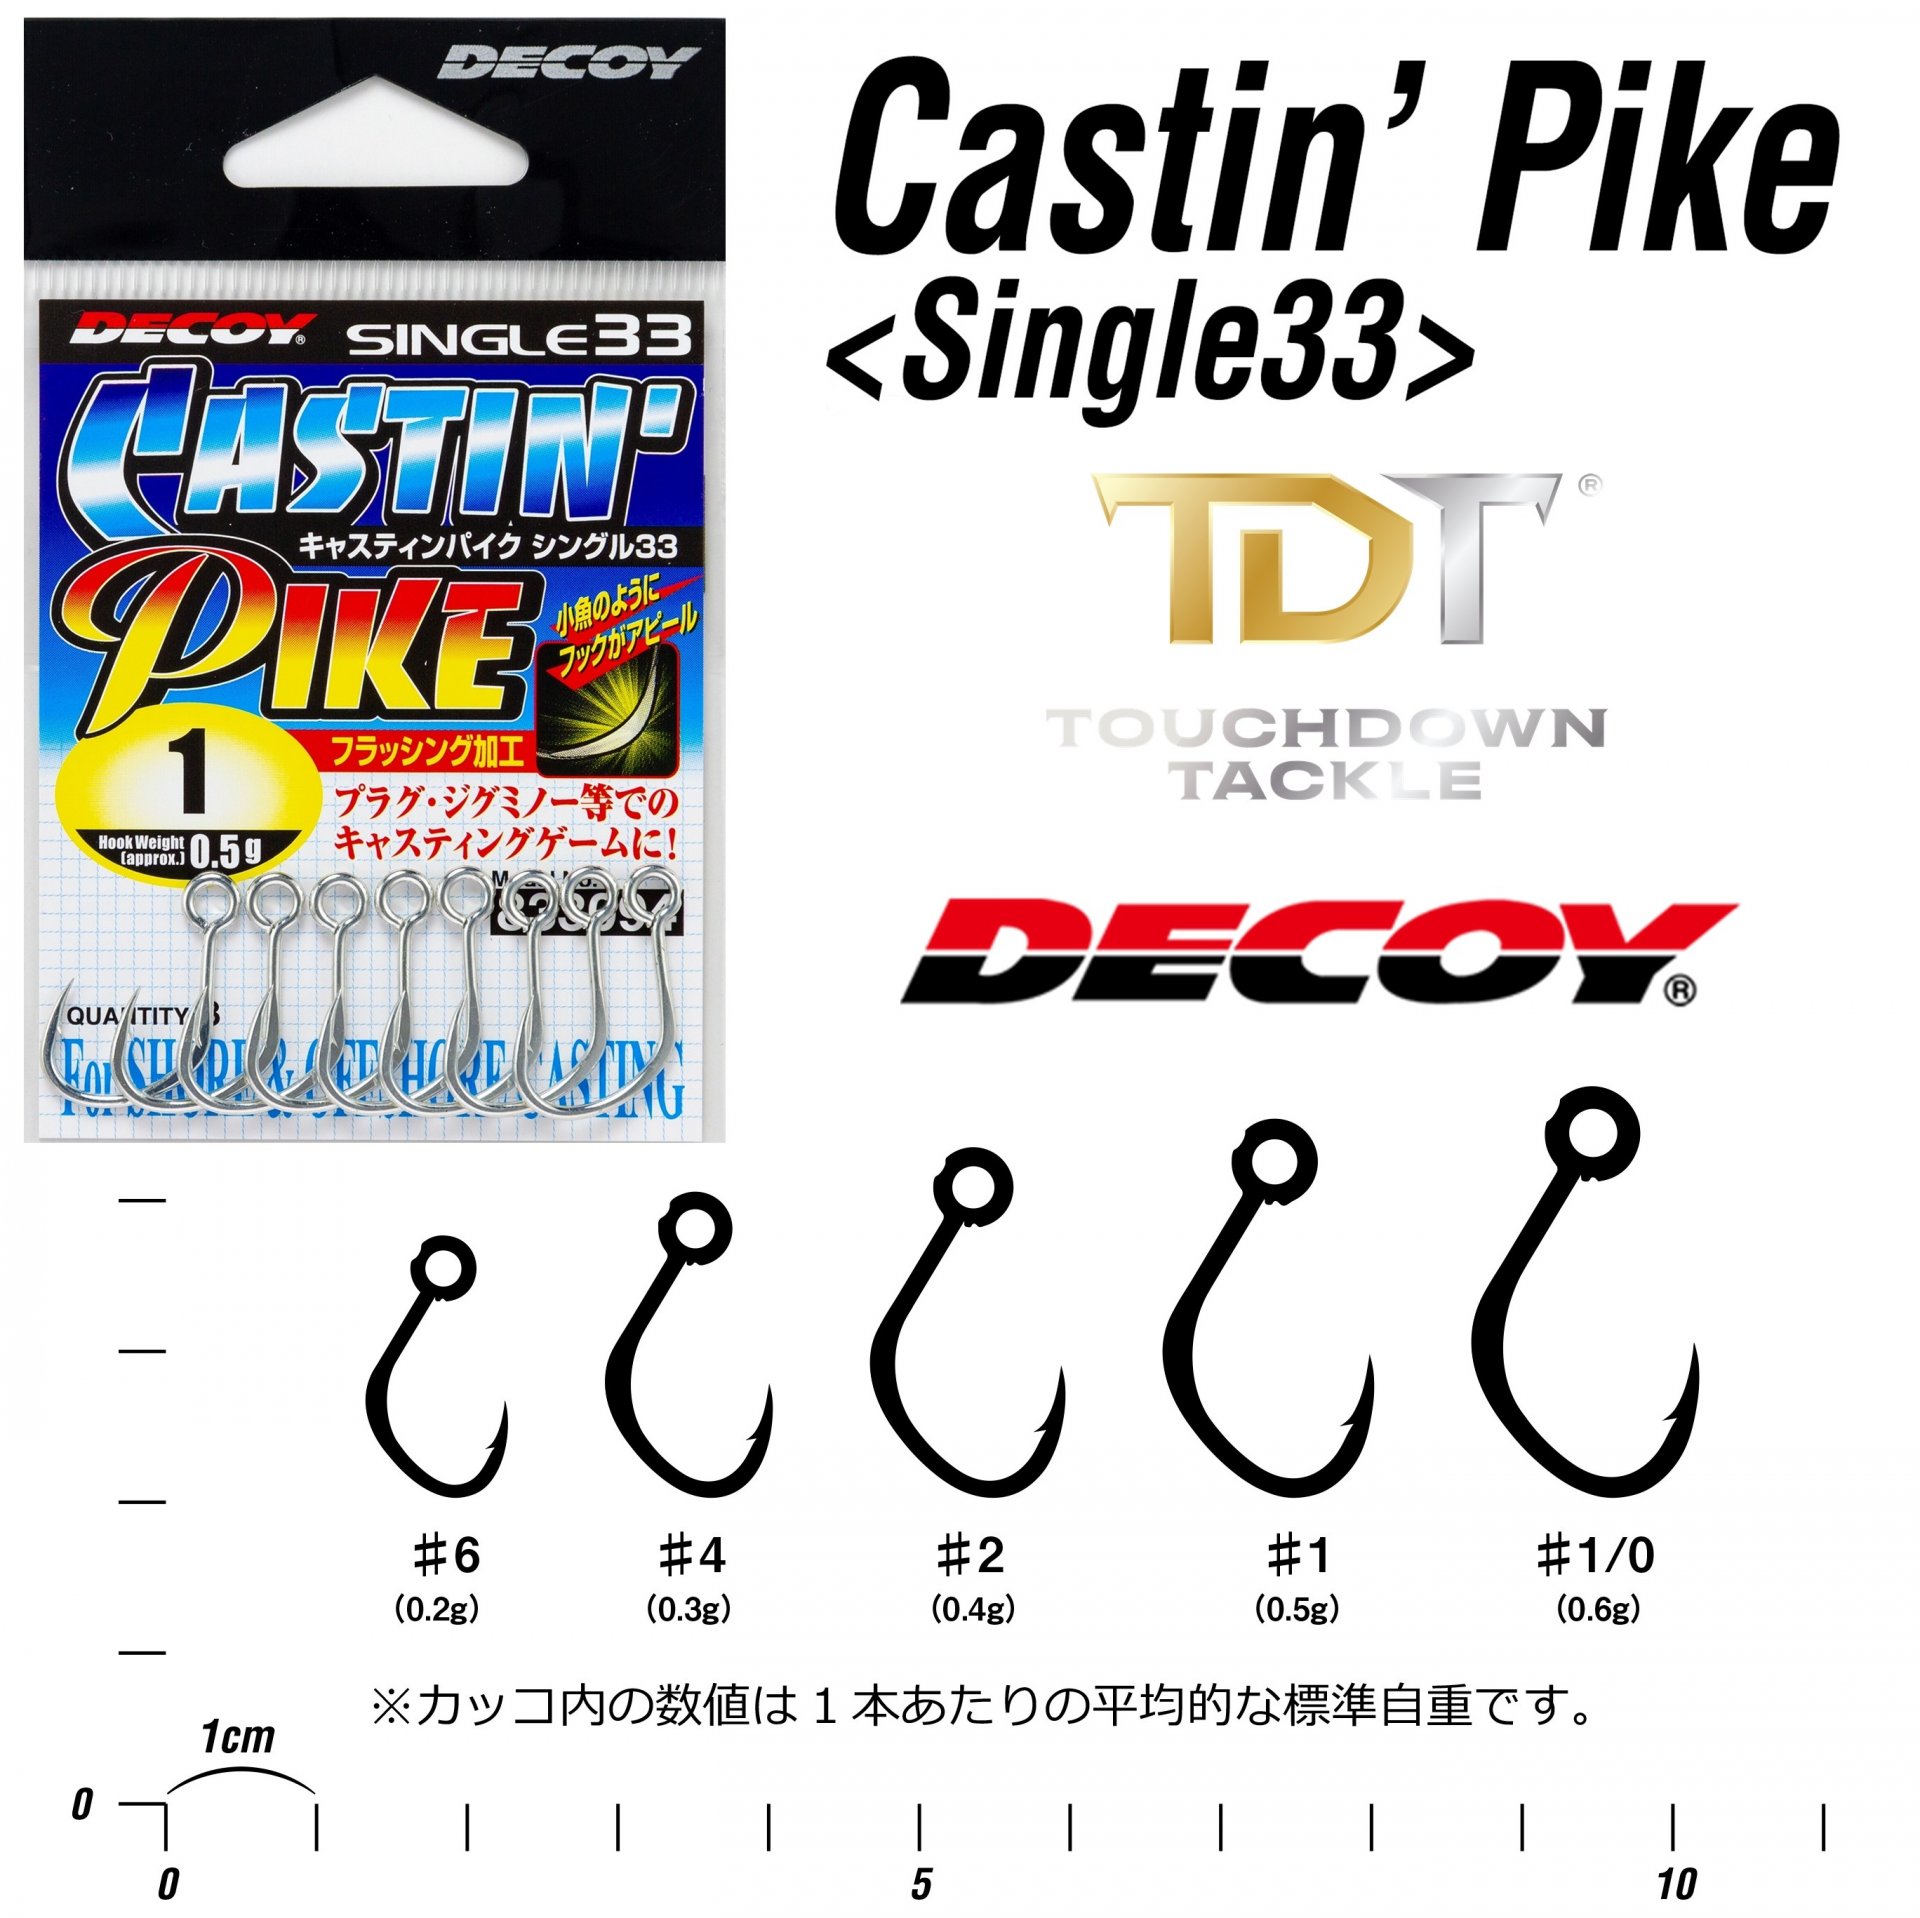 DECOY SINGLE33 CASTING PIKE ซิงเกิ้ลฮุคงานโหดๆ ญี่ปุ่นแท้ 100%